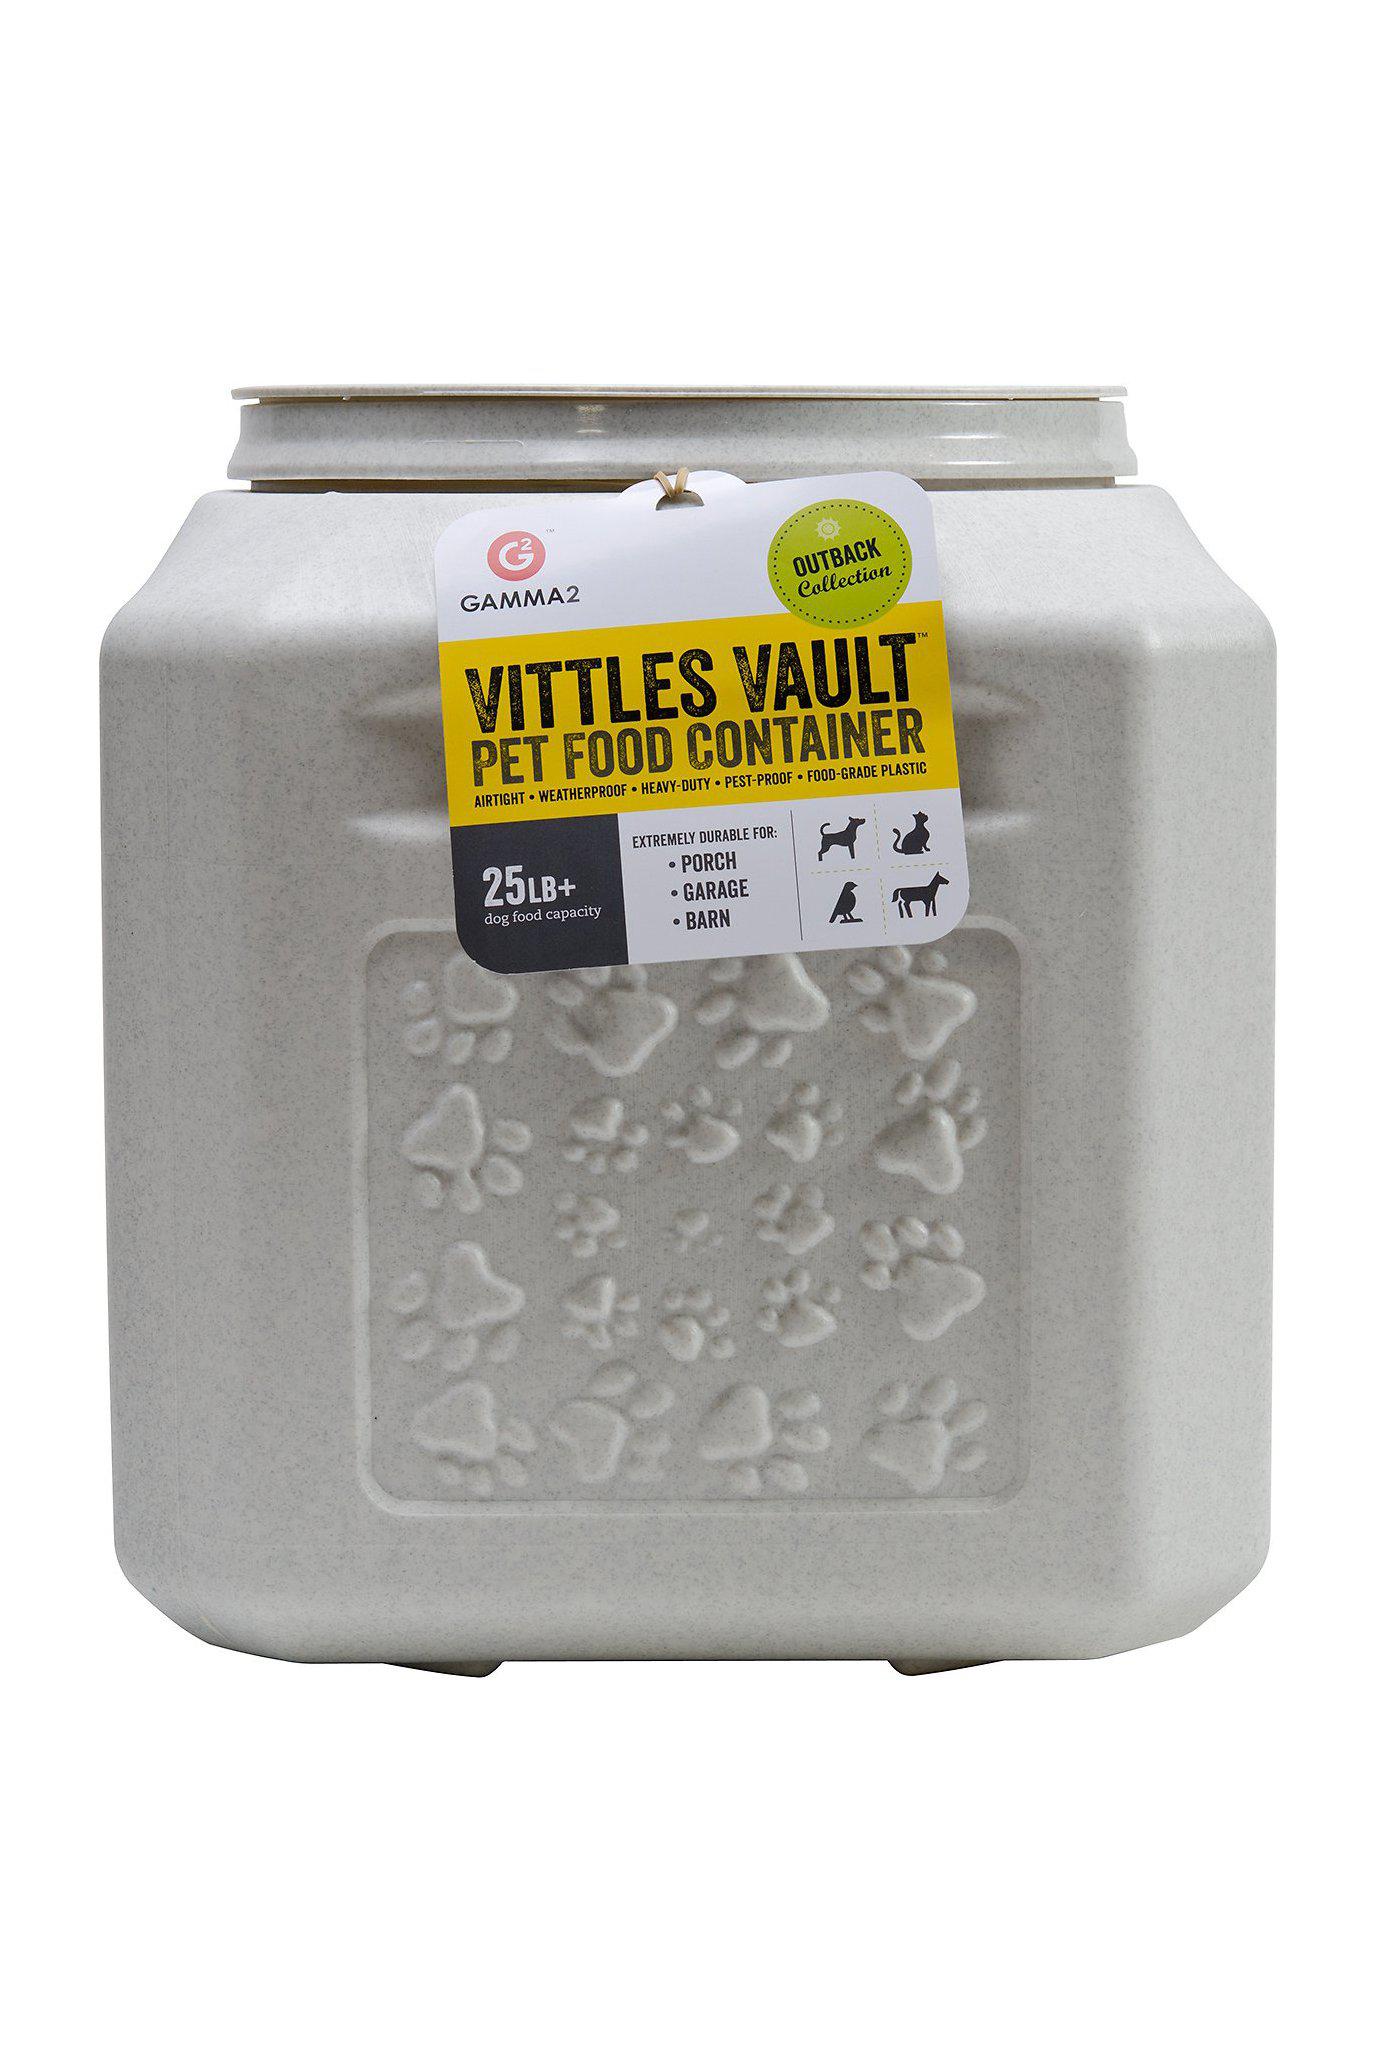 Vittles Vault Pet Food Container 50 Pound